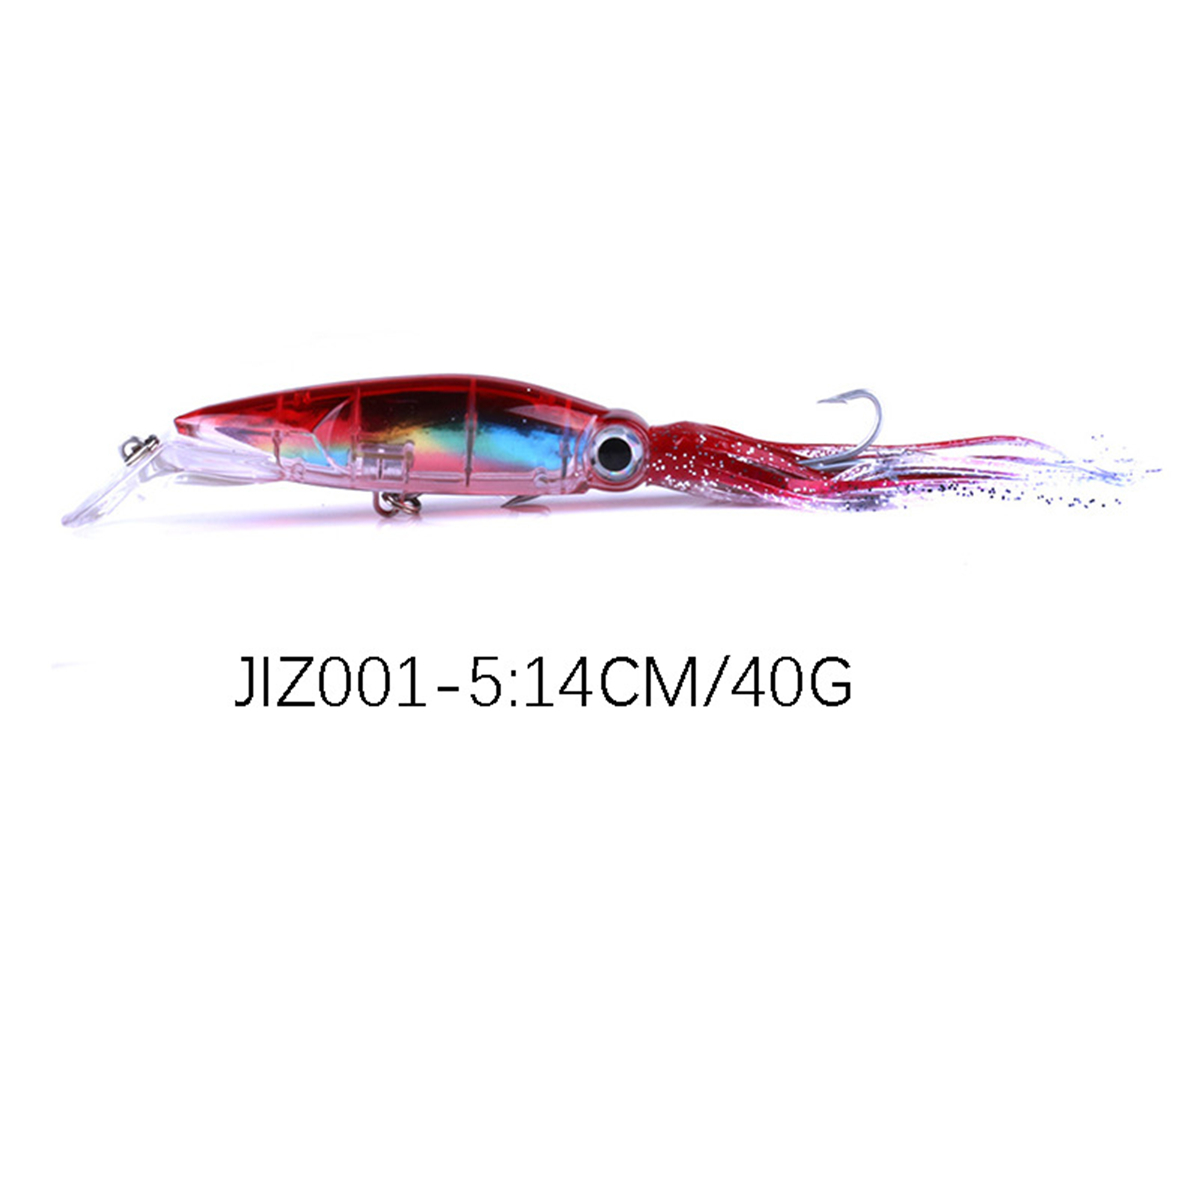 ZANLURE-Skirted-Squid-Lure-1pcs-14cm40g--Hard-Body-Trolling-Tuna-Fishing-Lure-1553676-7